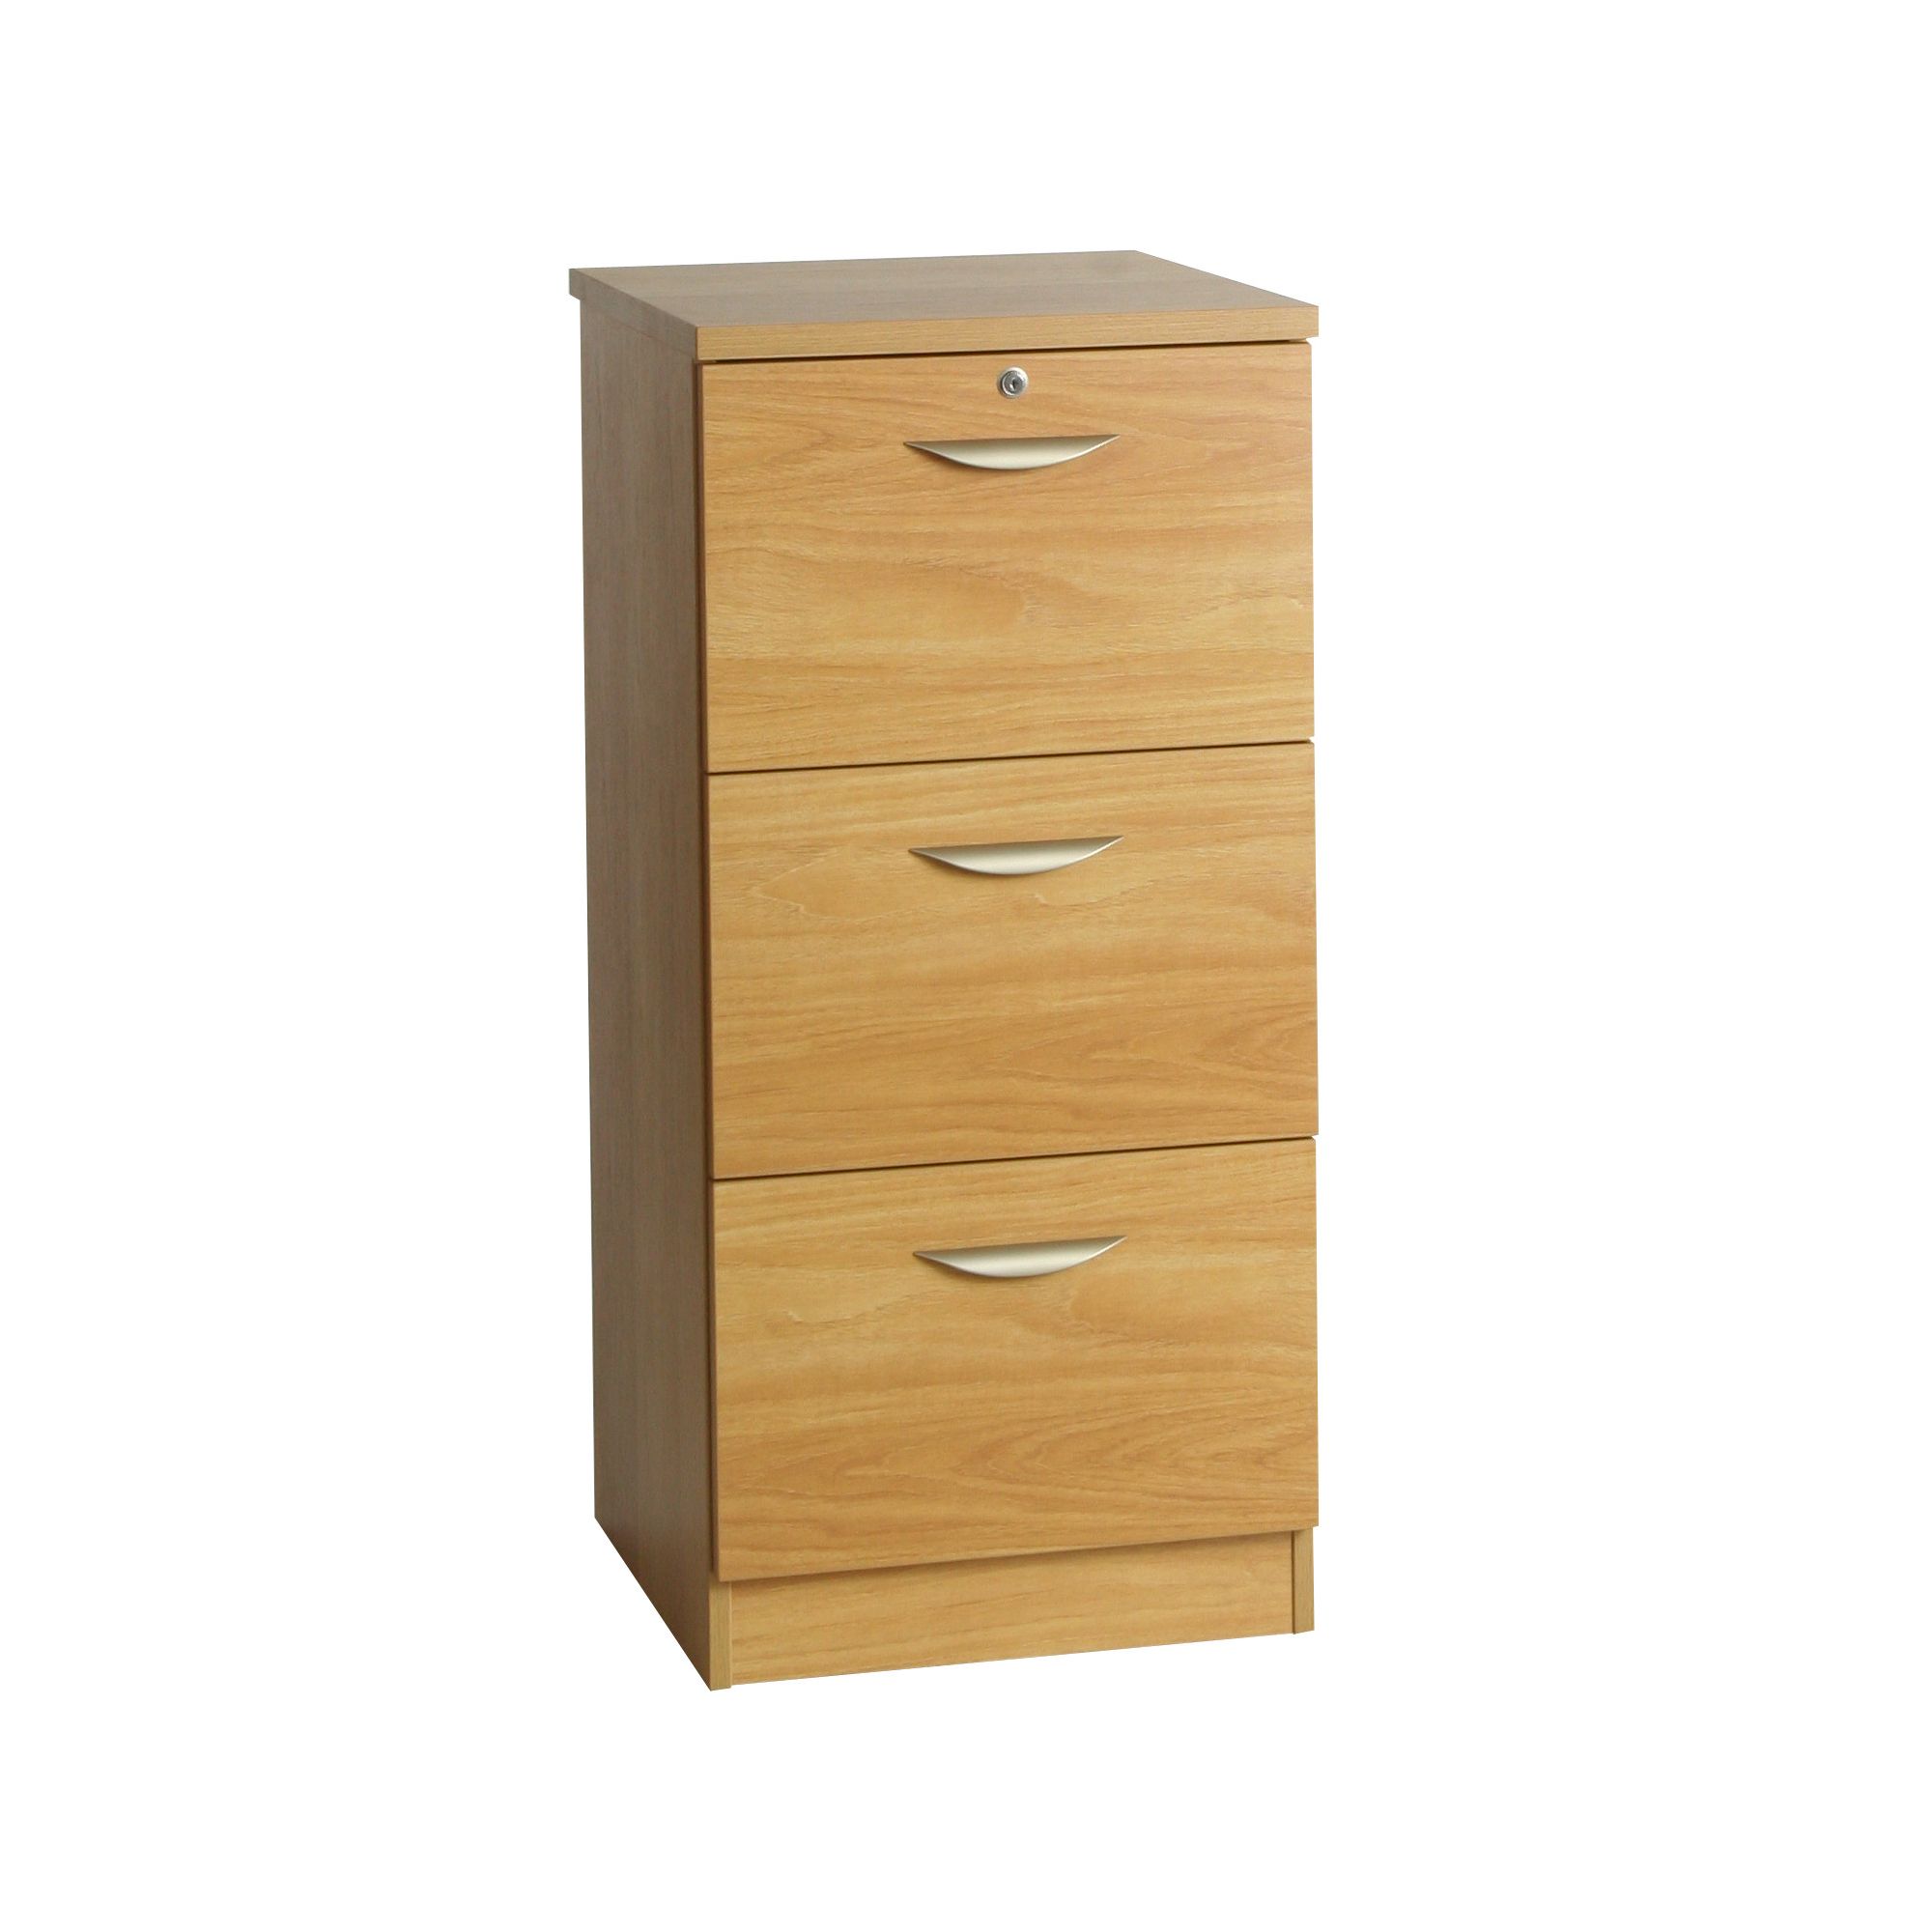 Enduro Three Drawer Tall Wooden Filing Cabinet - English Oak at Tesco Direct